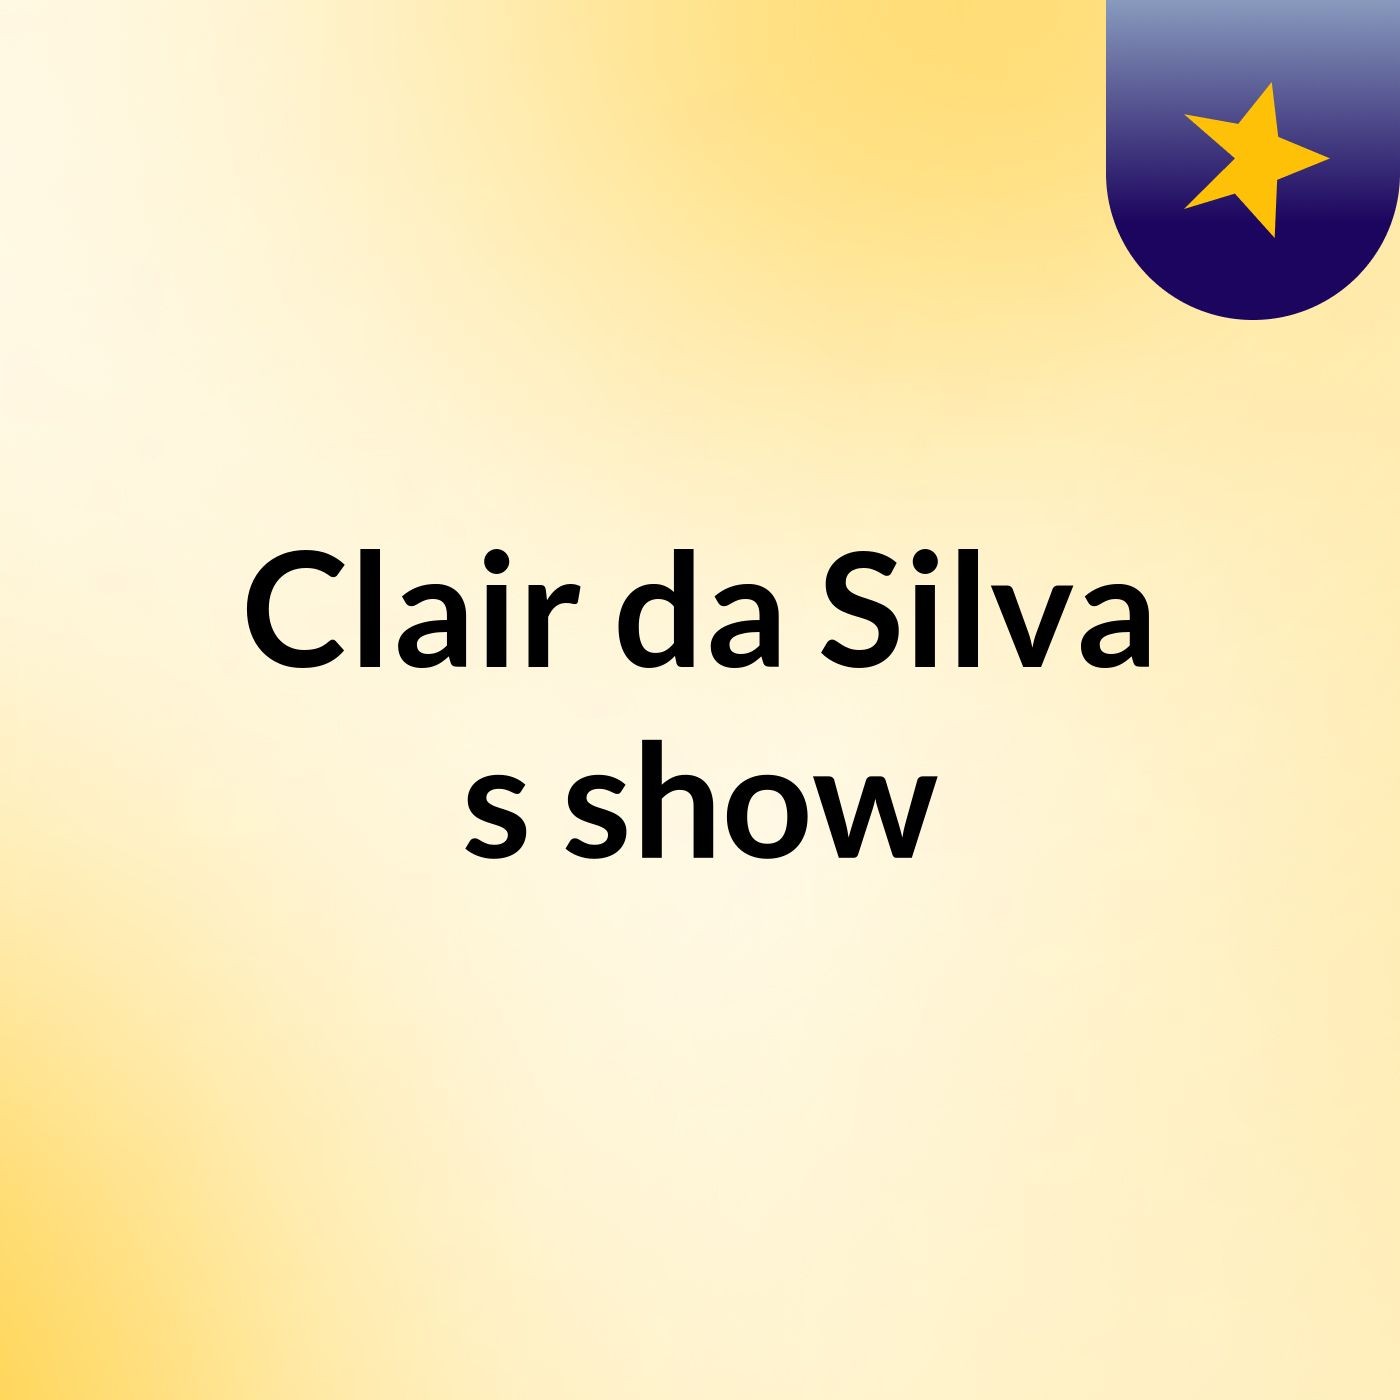 Clair da Silva's show